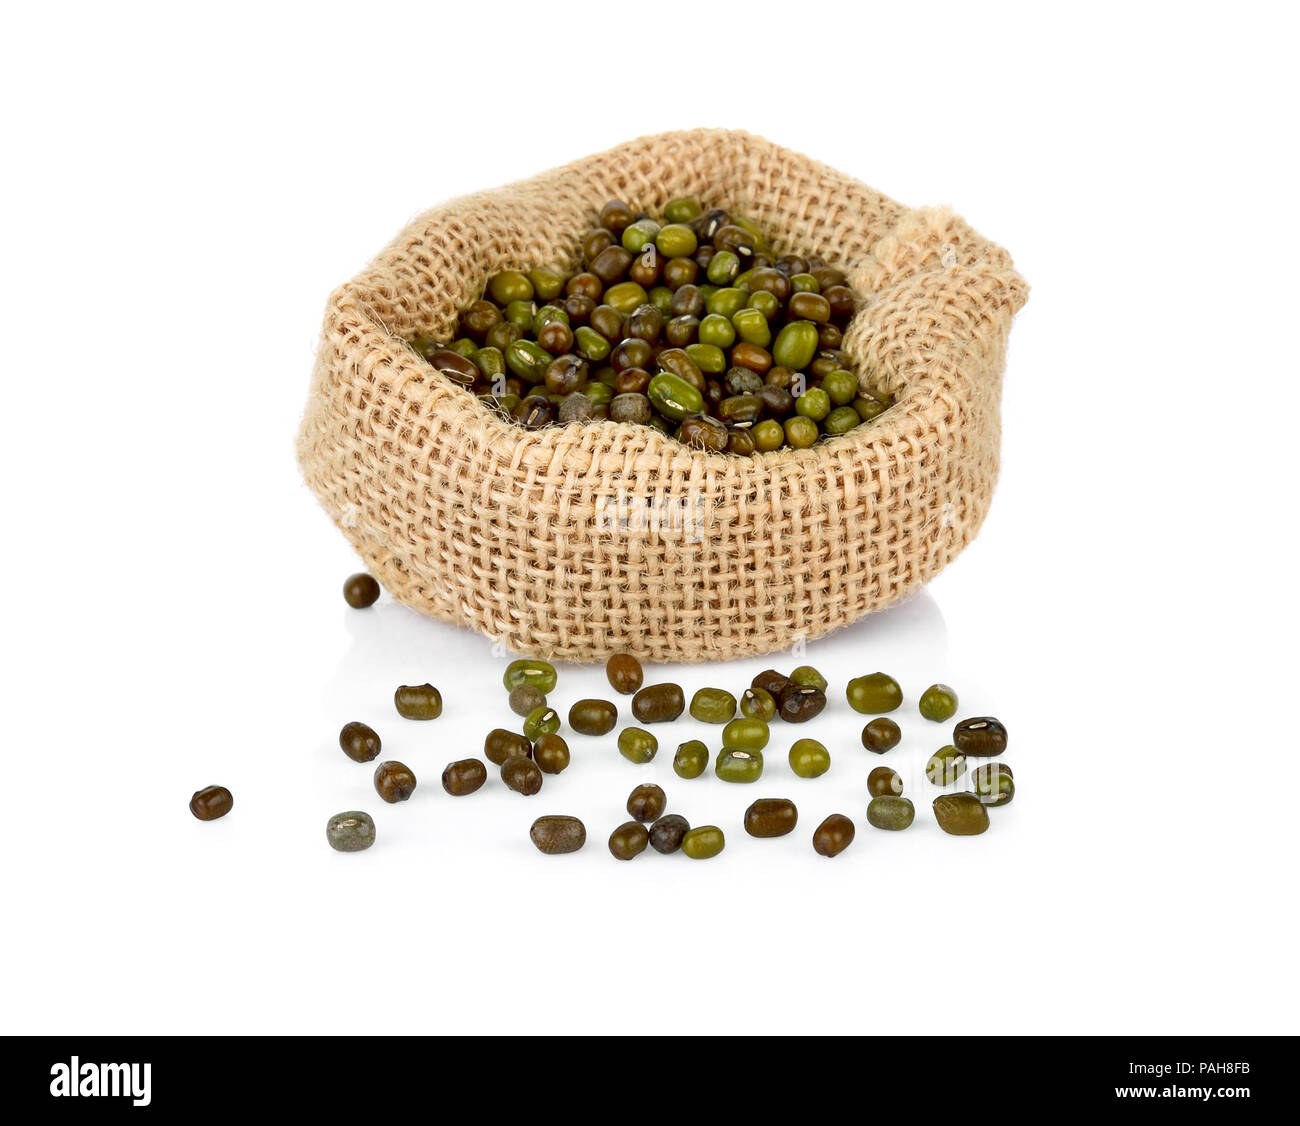 Mung beans (Vigna radiata) in bag on white background Stock Photo